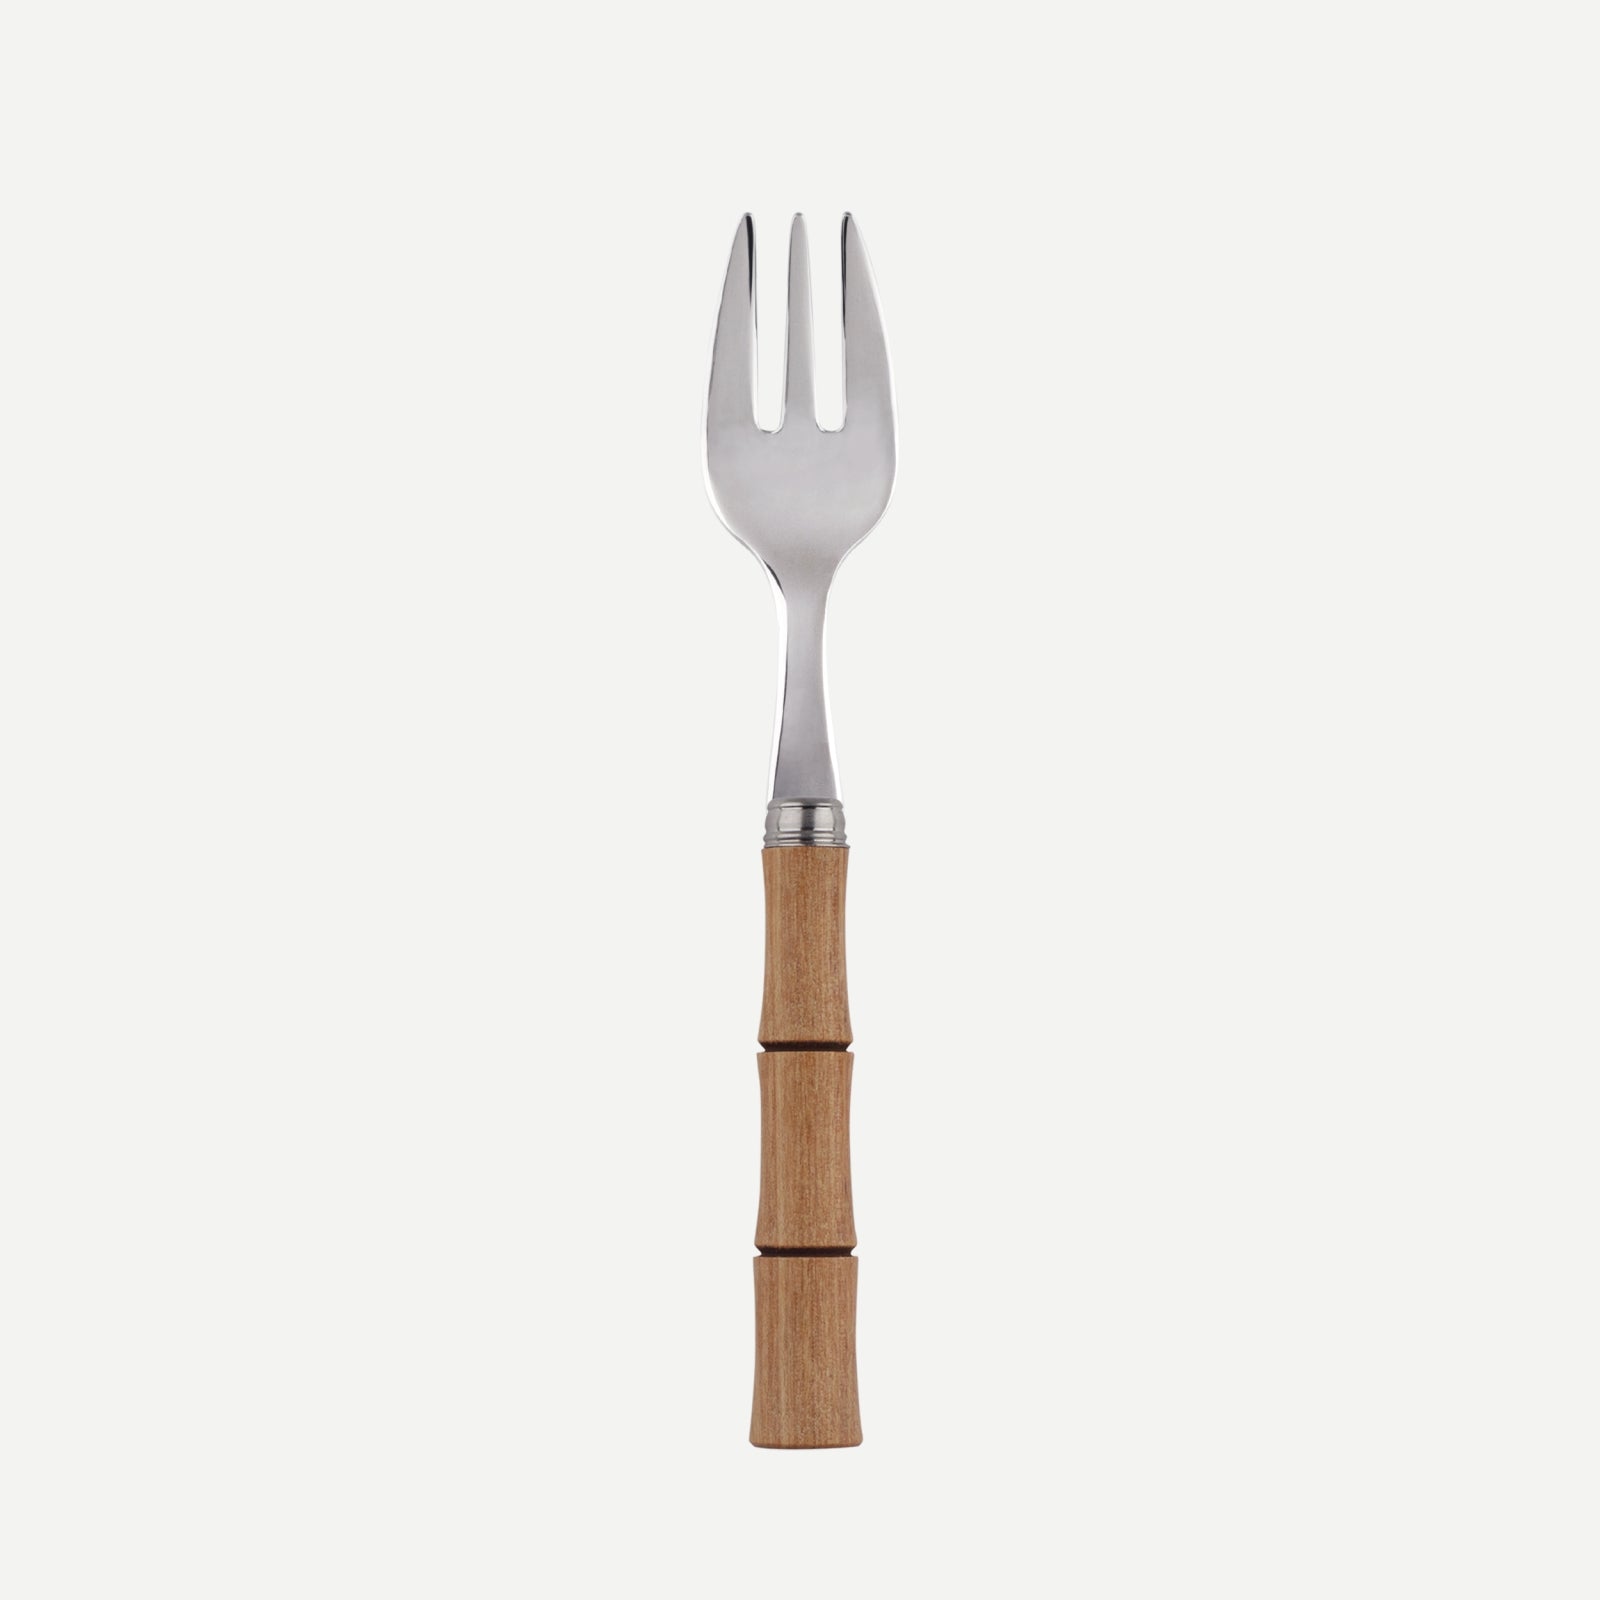 Oyster fork - Bamboo - Light press wood